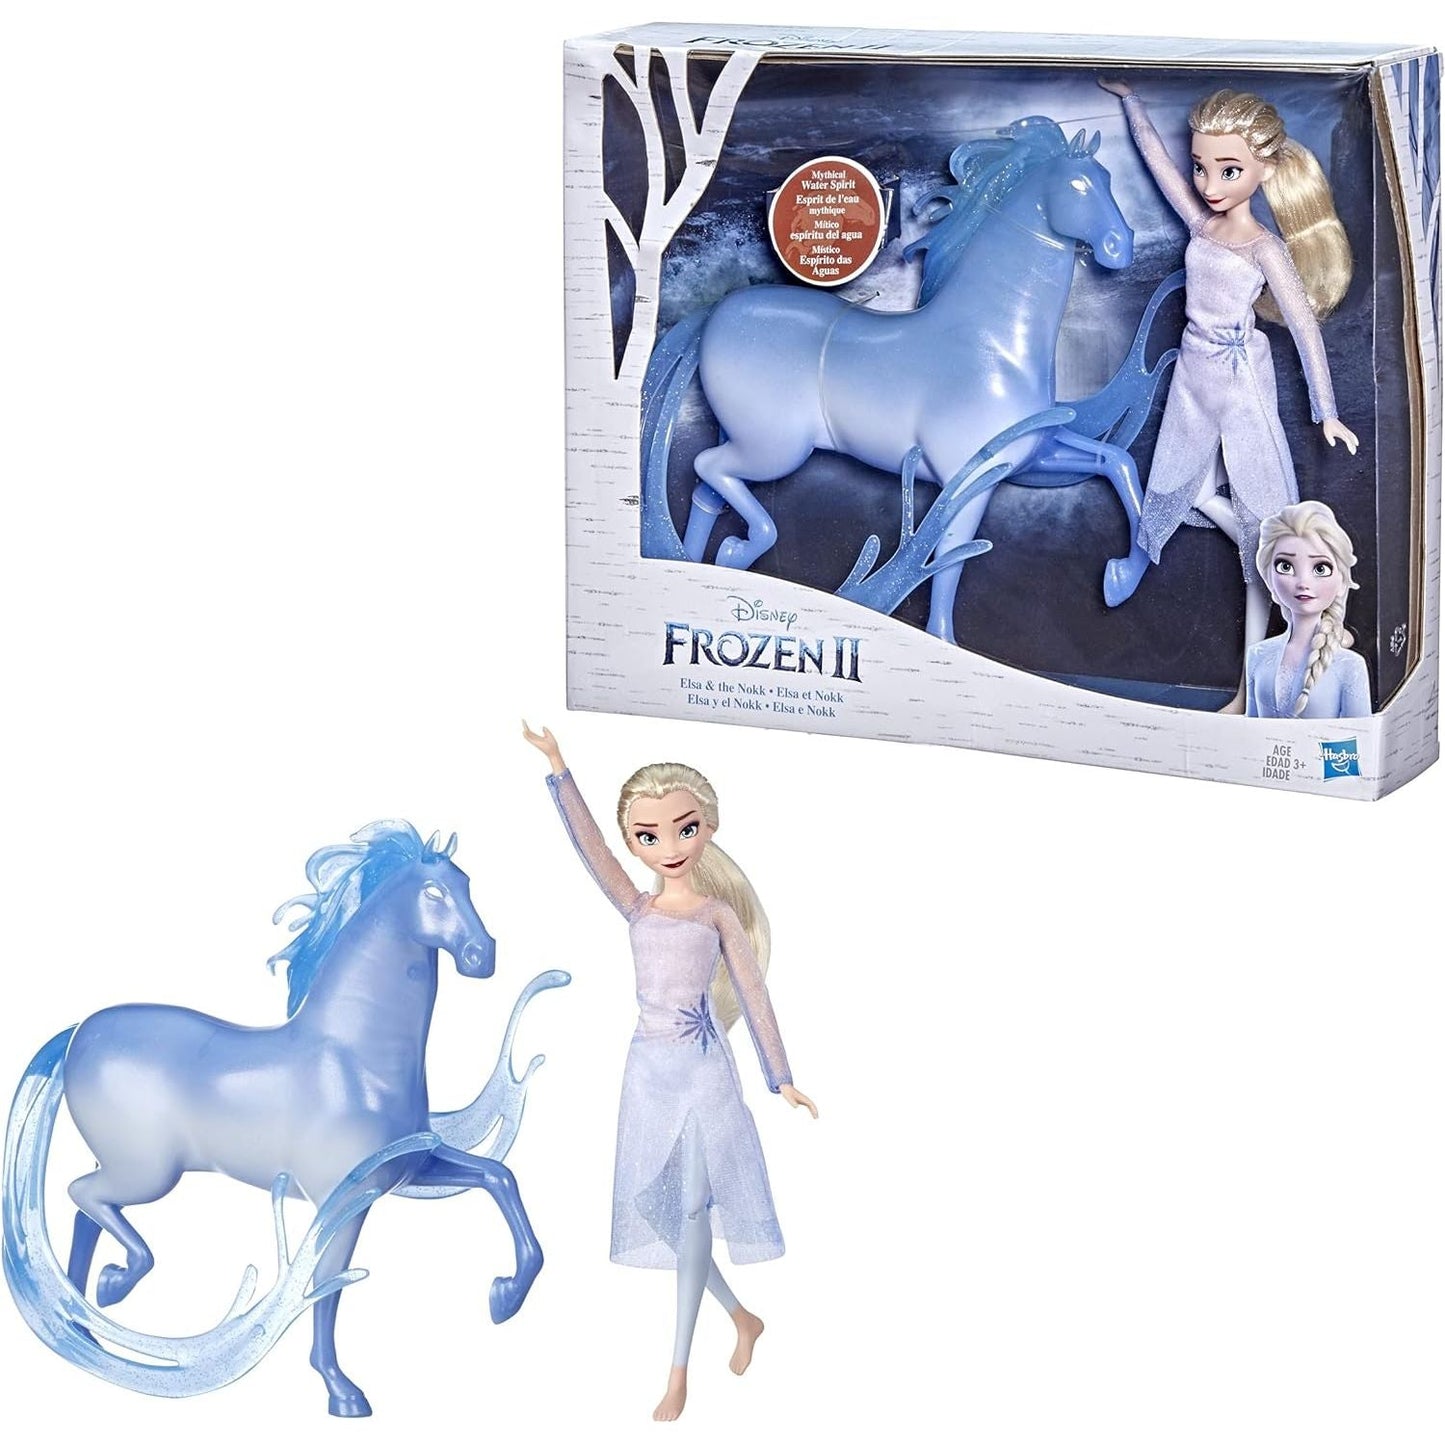 Disney Frozen 2 Elsa Doll and The Nokk Figure, Toy for Kids 3 and Up Toys - Sabat Deals630509859276